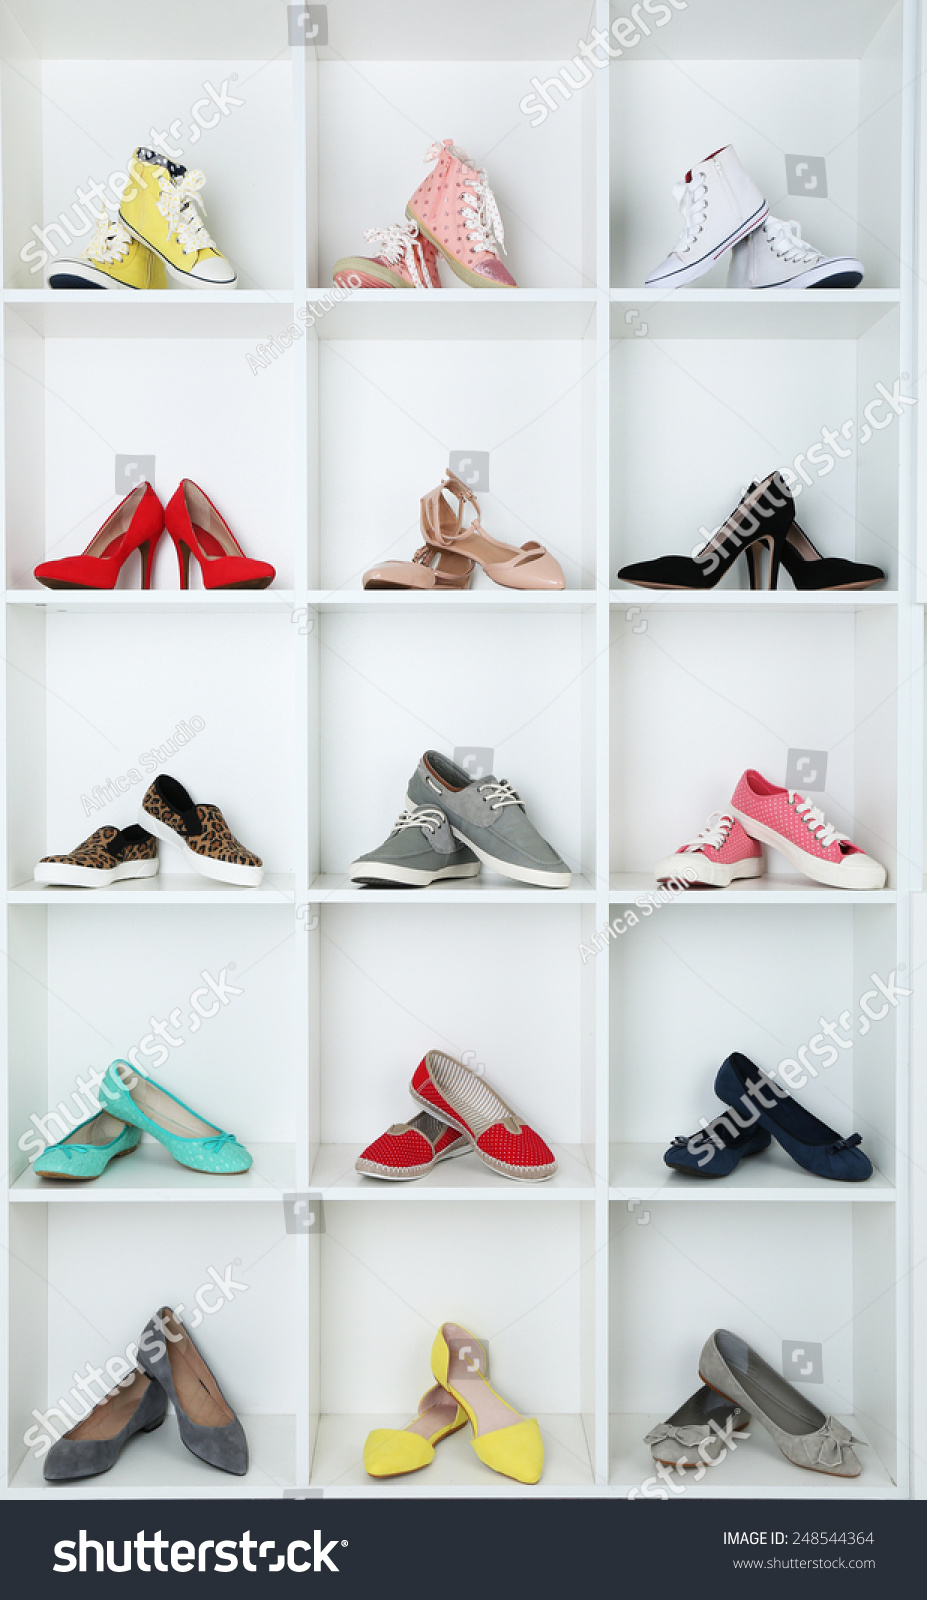 26,173 Shoe shelf Images, Stock Photos & Vectors | Shutterstock